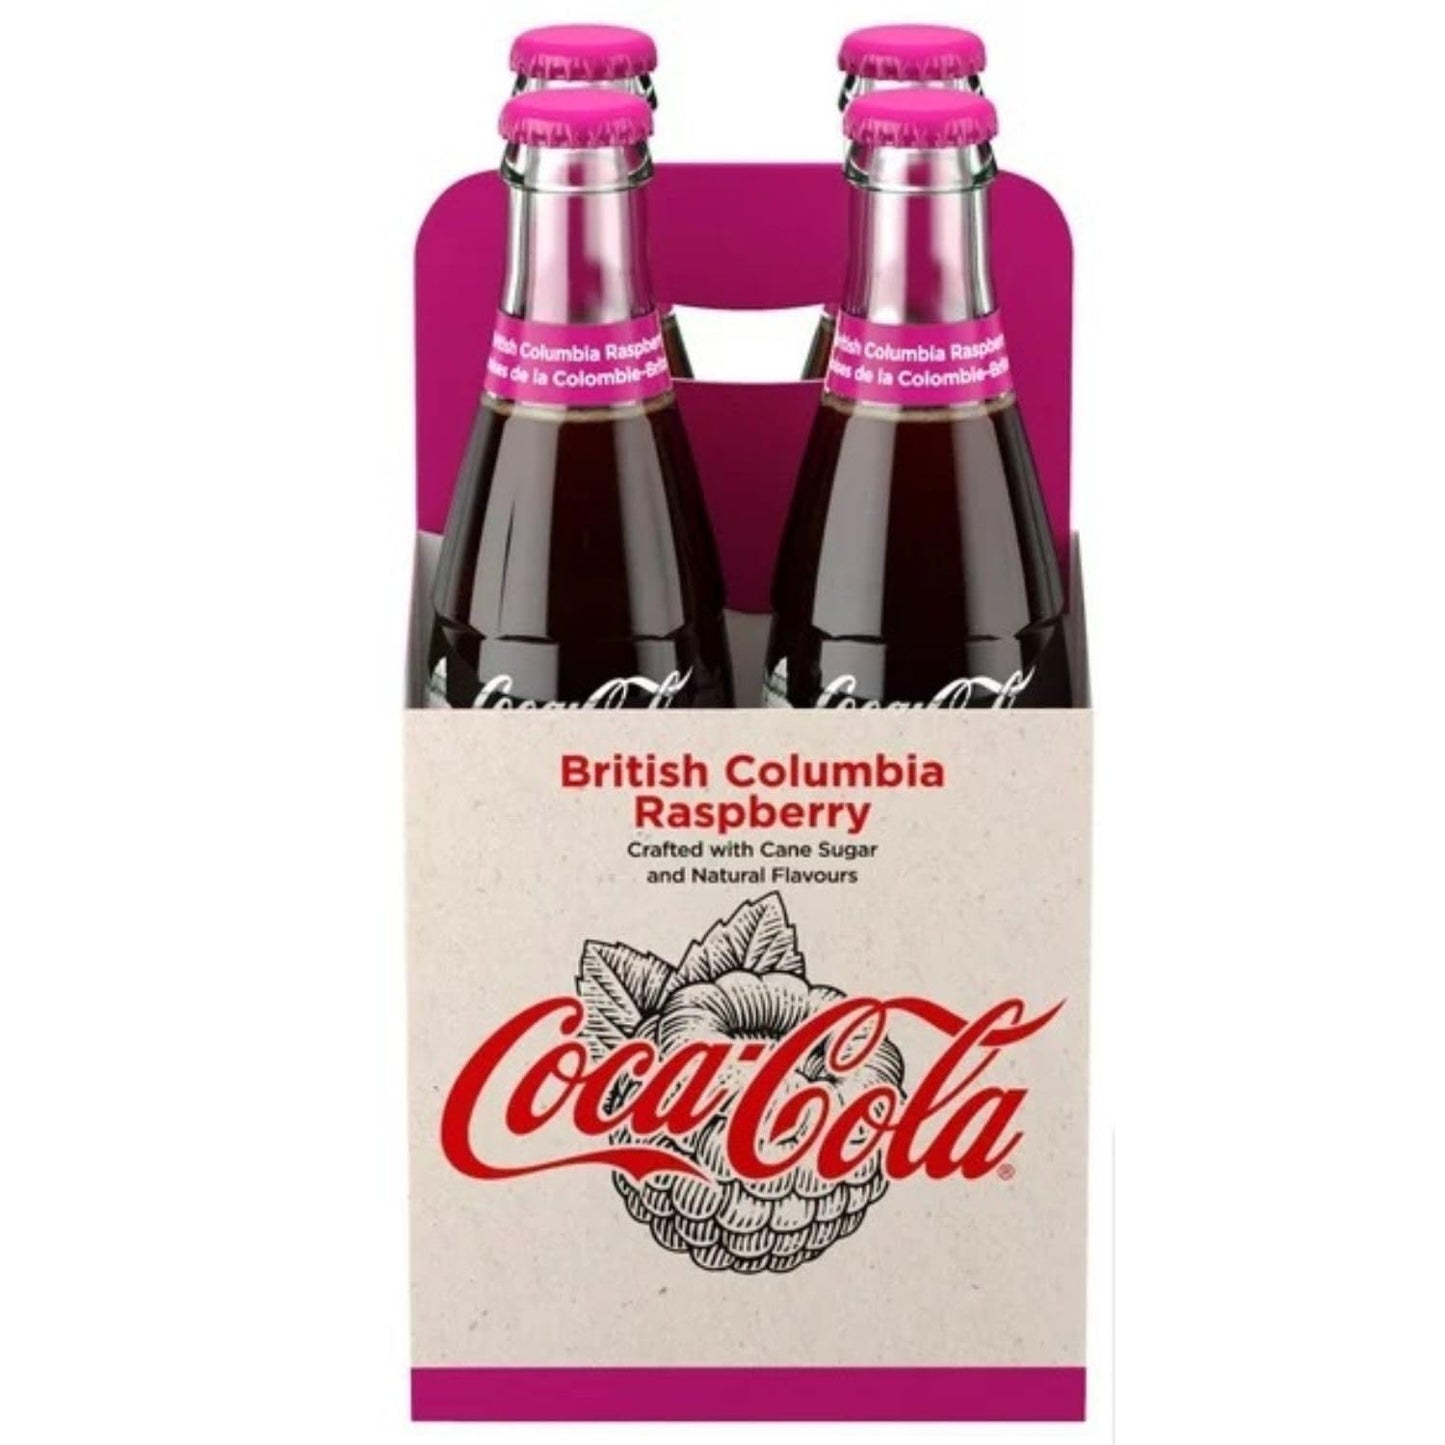 Coca-Cola British Columbia Raspberry pack of 4